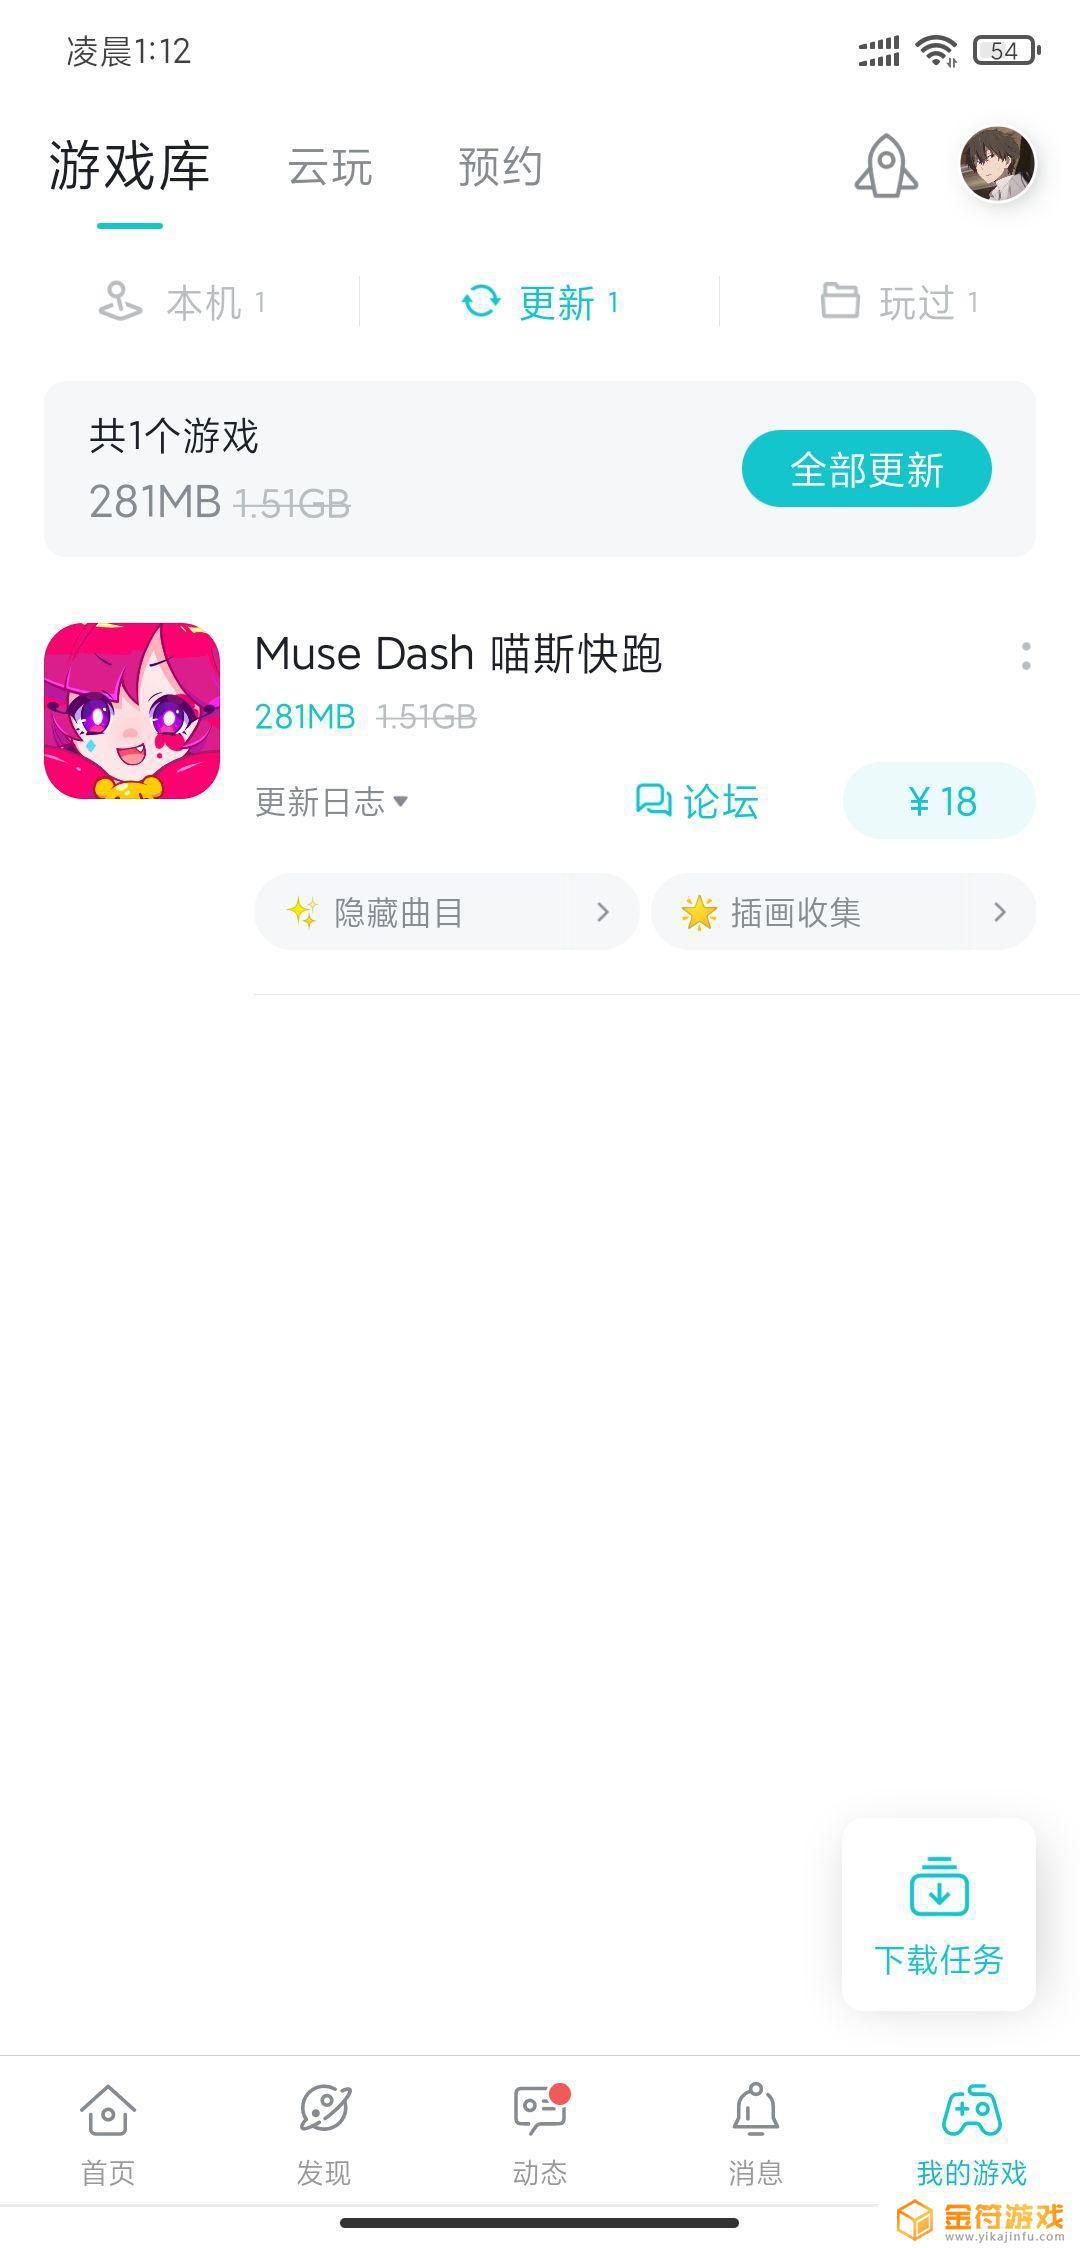 Muse Dash 喵斯快跑喵斯更新后要重新买吗？